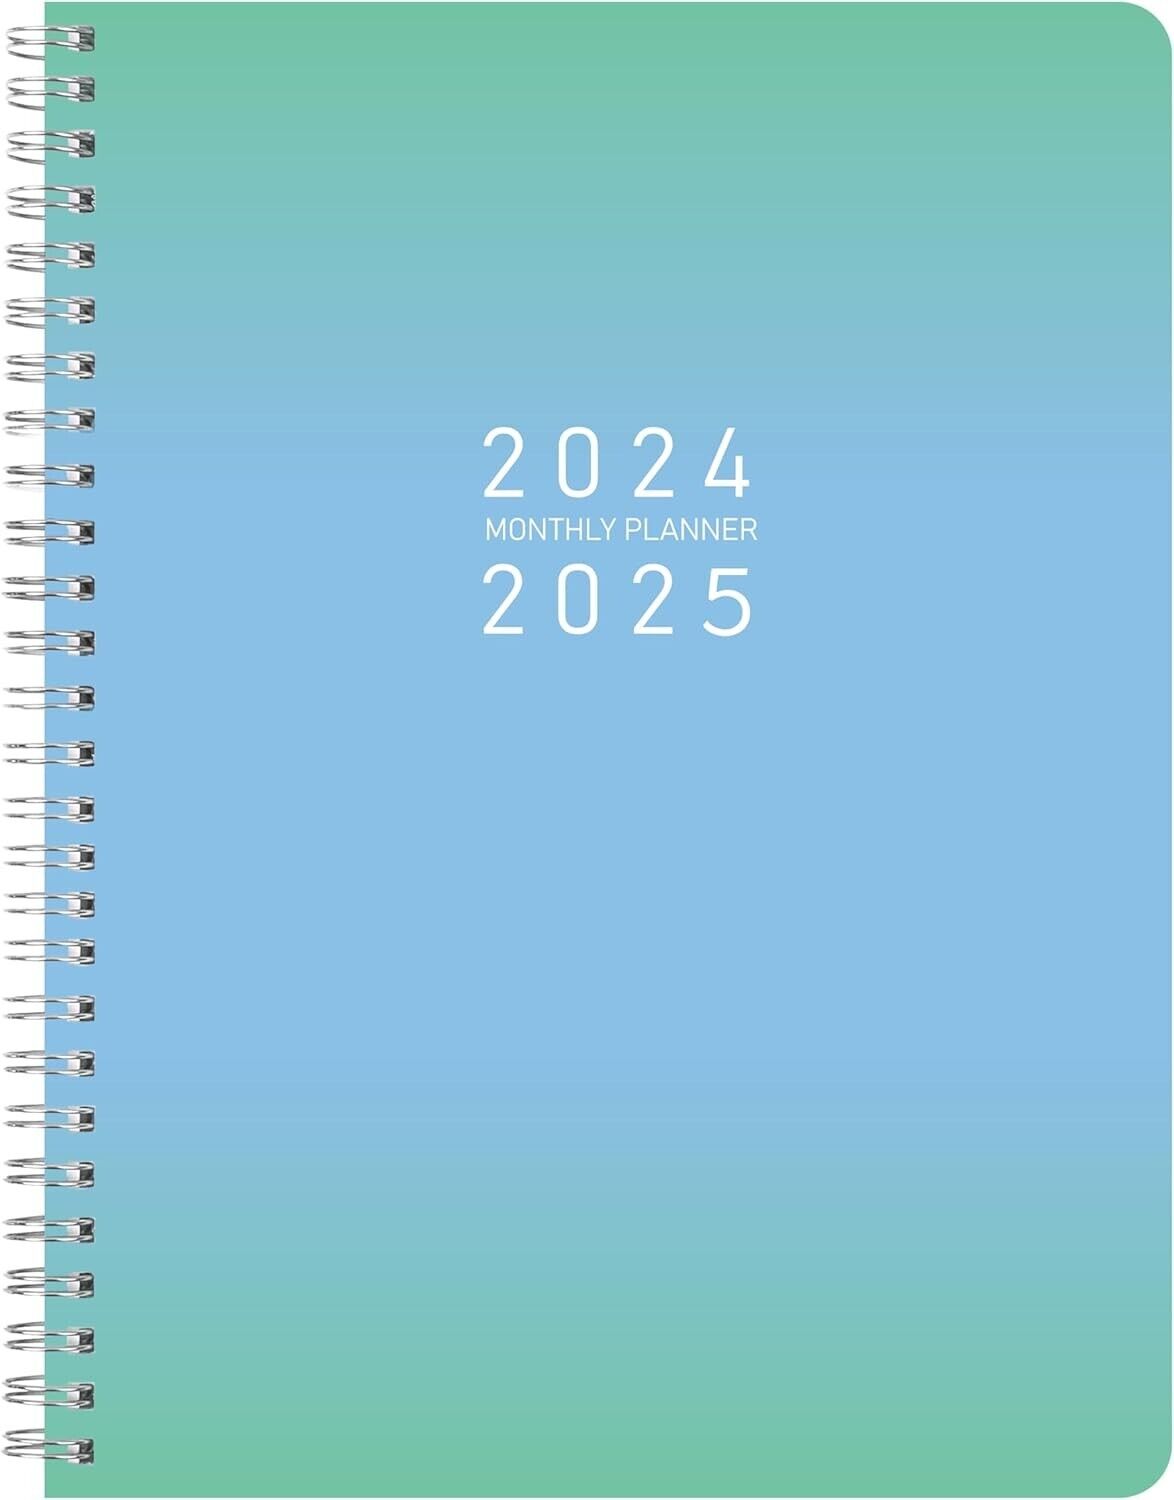 Monthly Planner 2024-2025, Simple Calendar Notebook 7.3